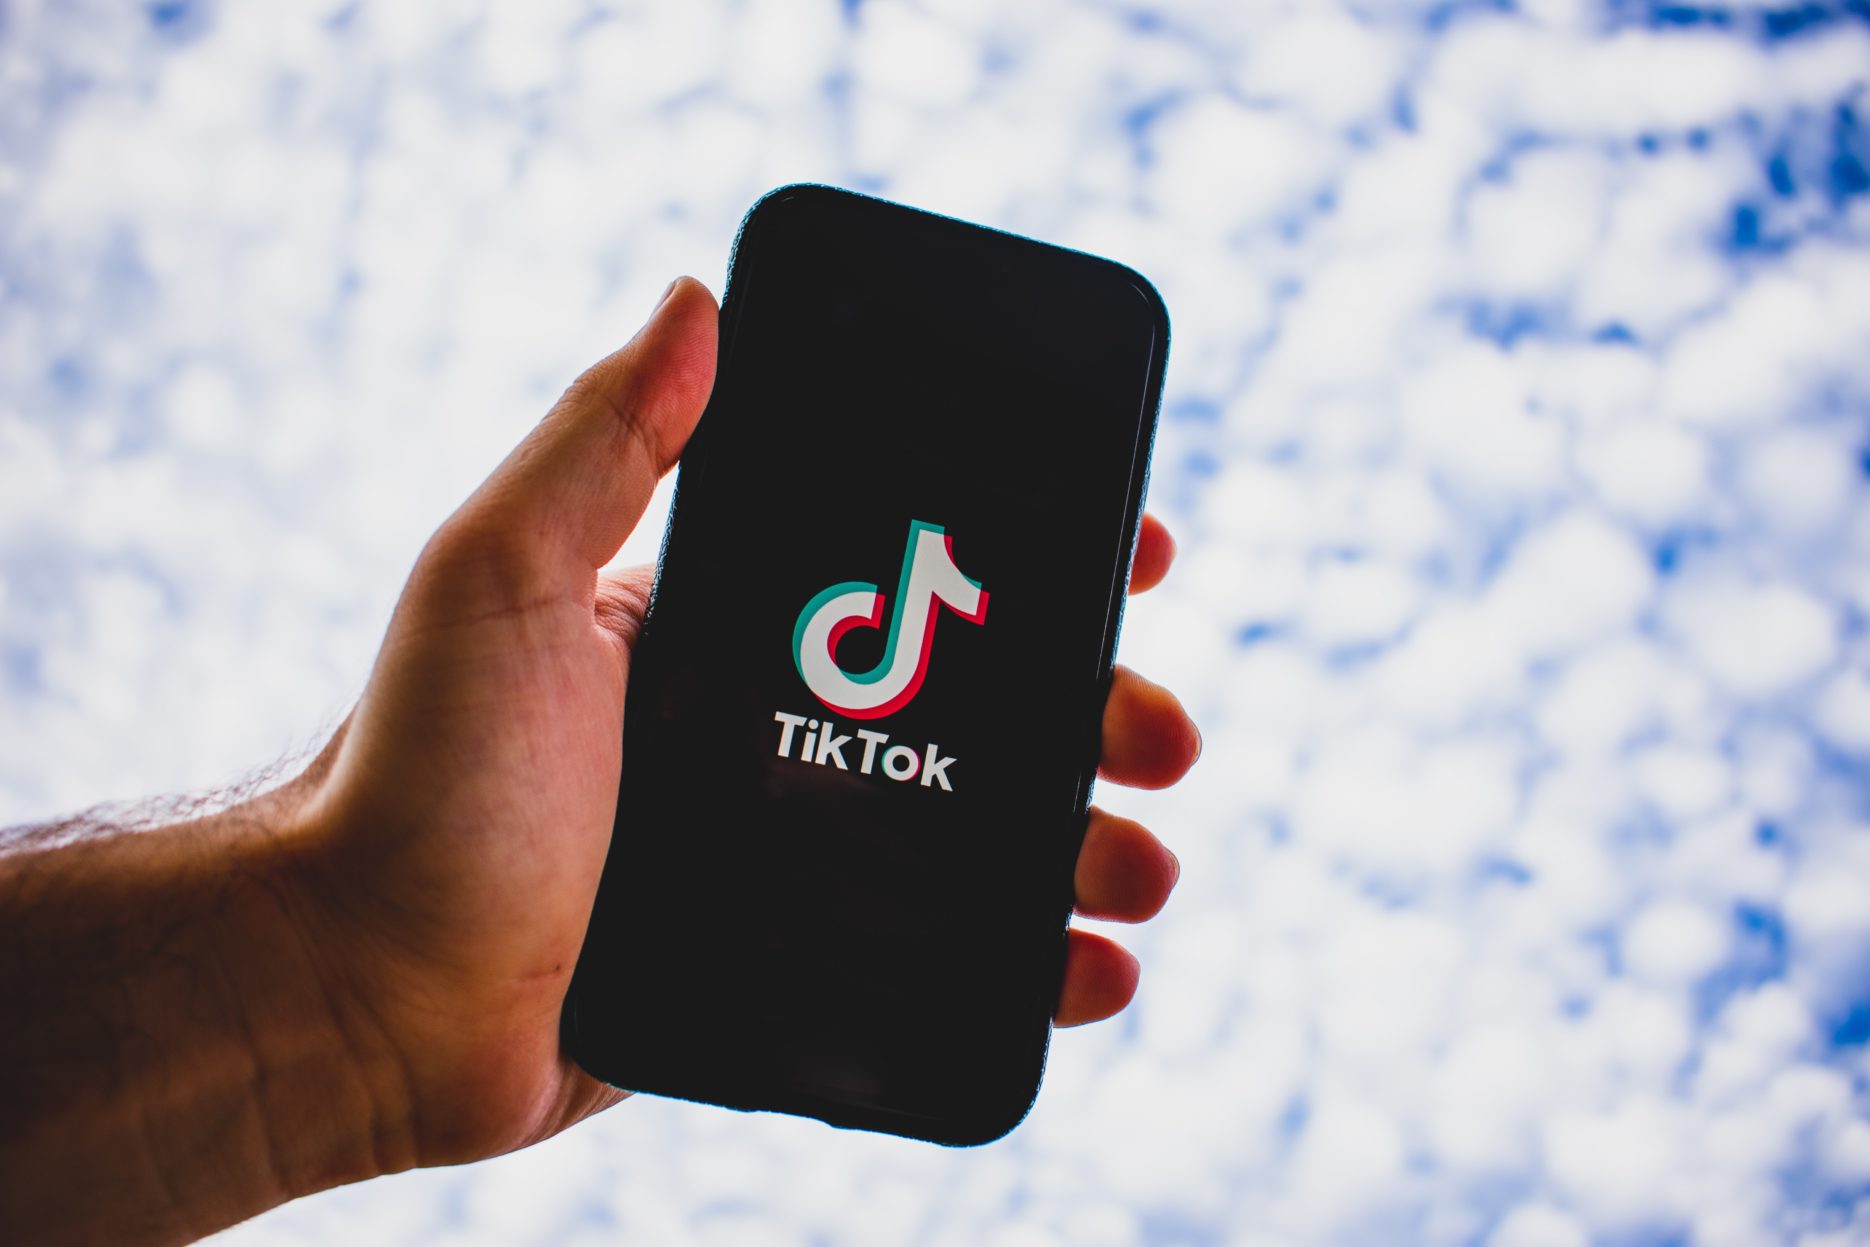 TikTok phone screen against clouds